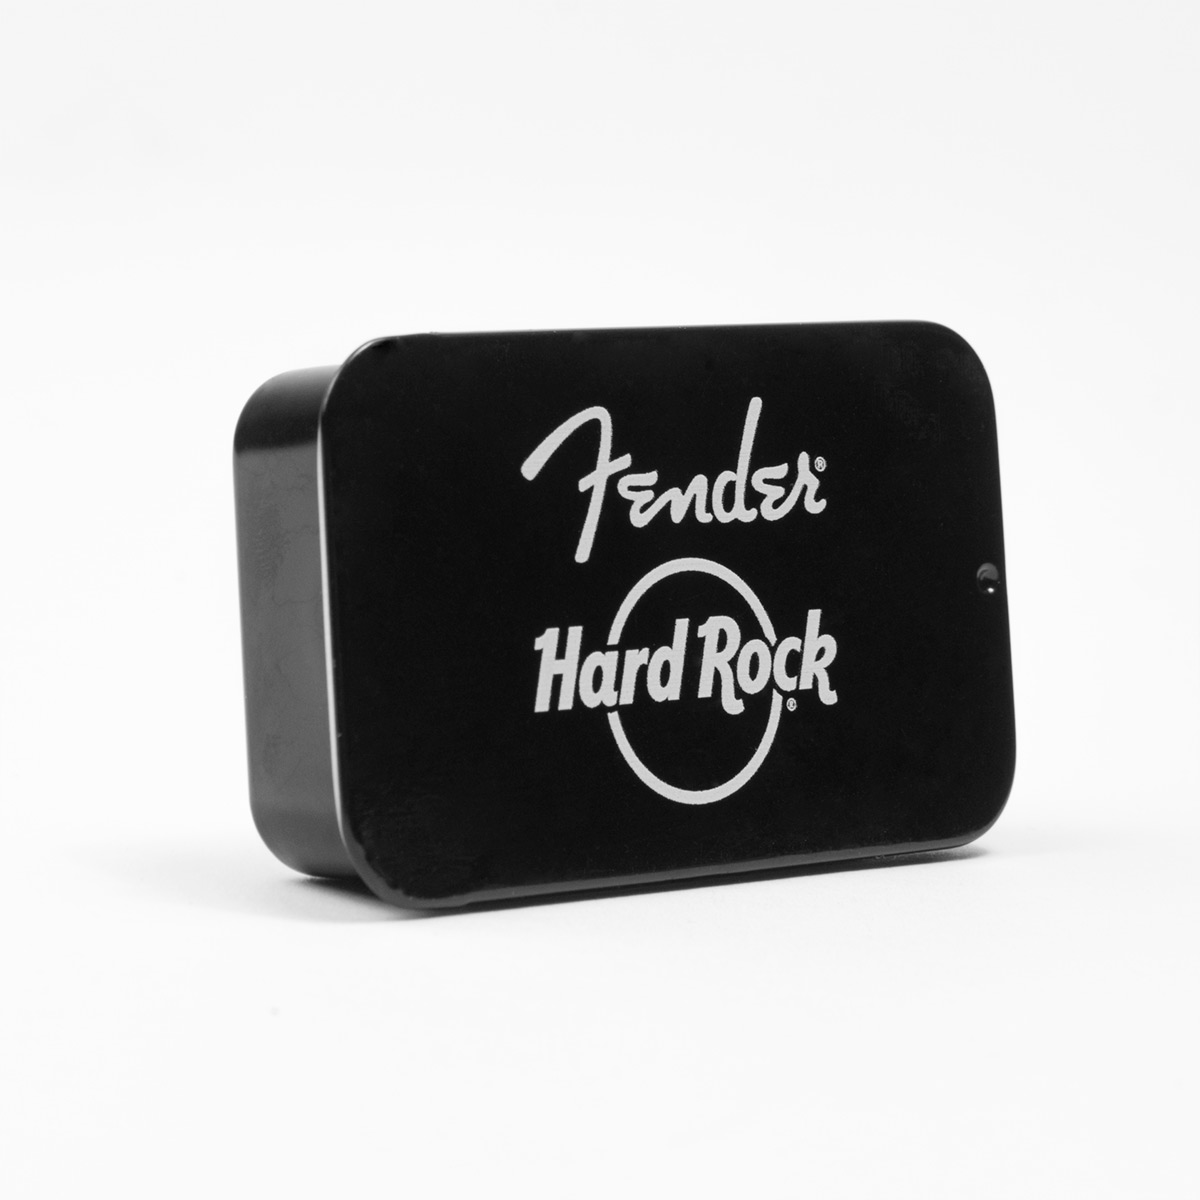 Fender x Hard Rock 12pk Guitar Pick Tin Case image number 4